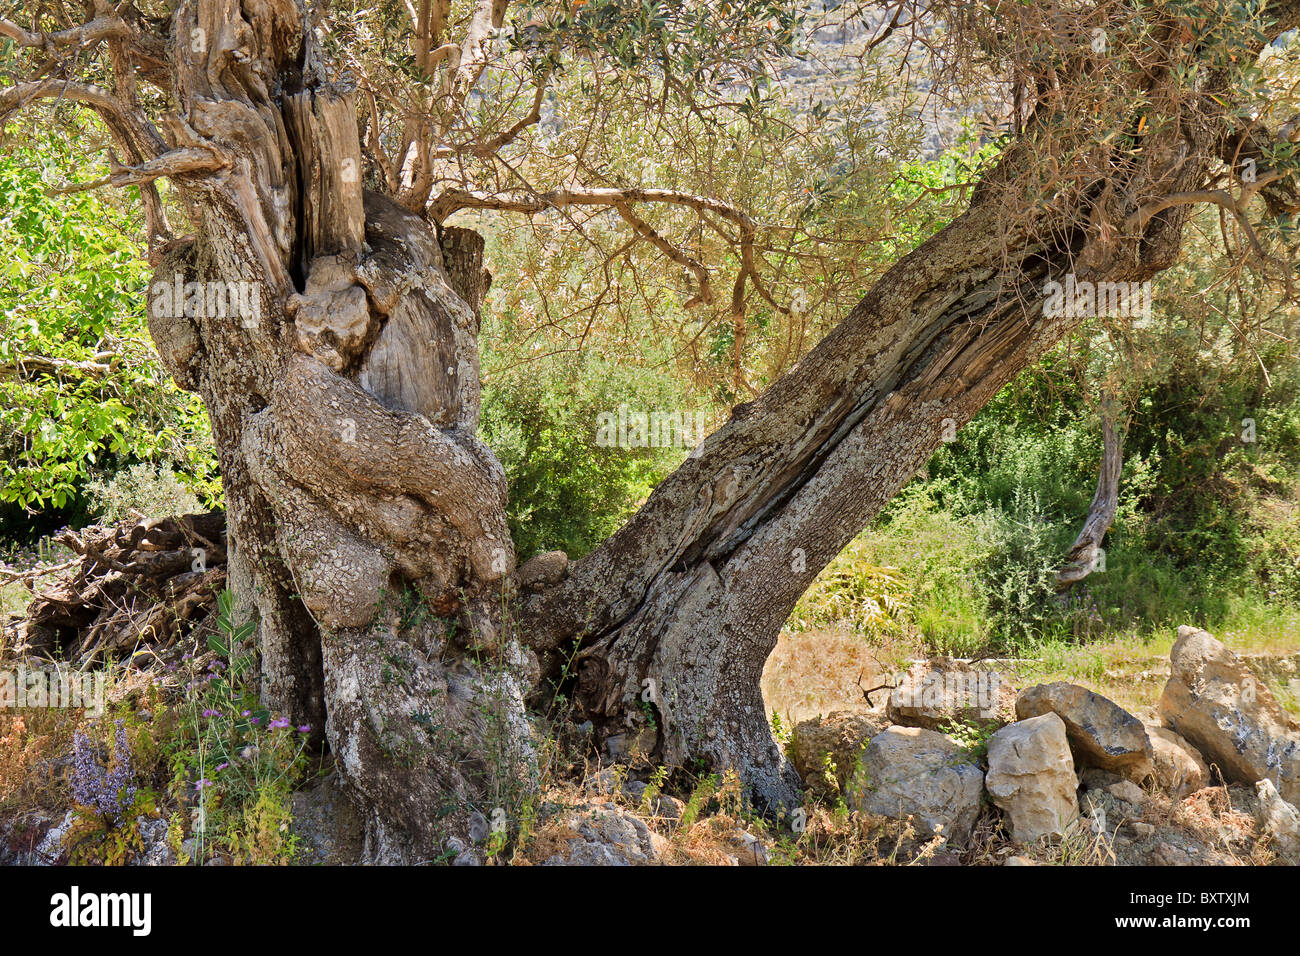 Greece Crete Spili Gnarled Old Olive Trees Stock Photo